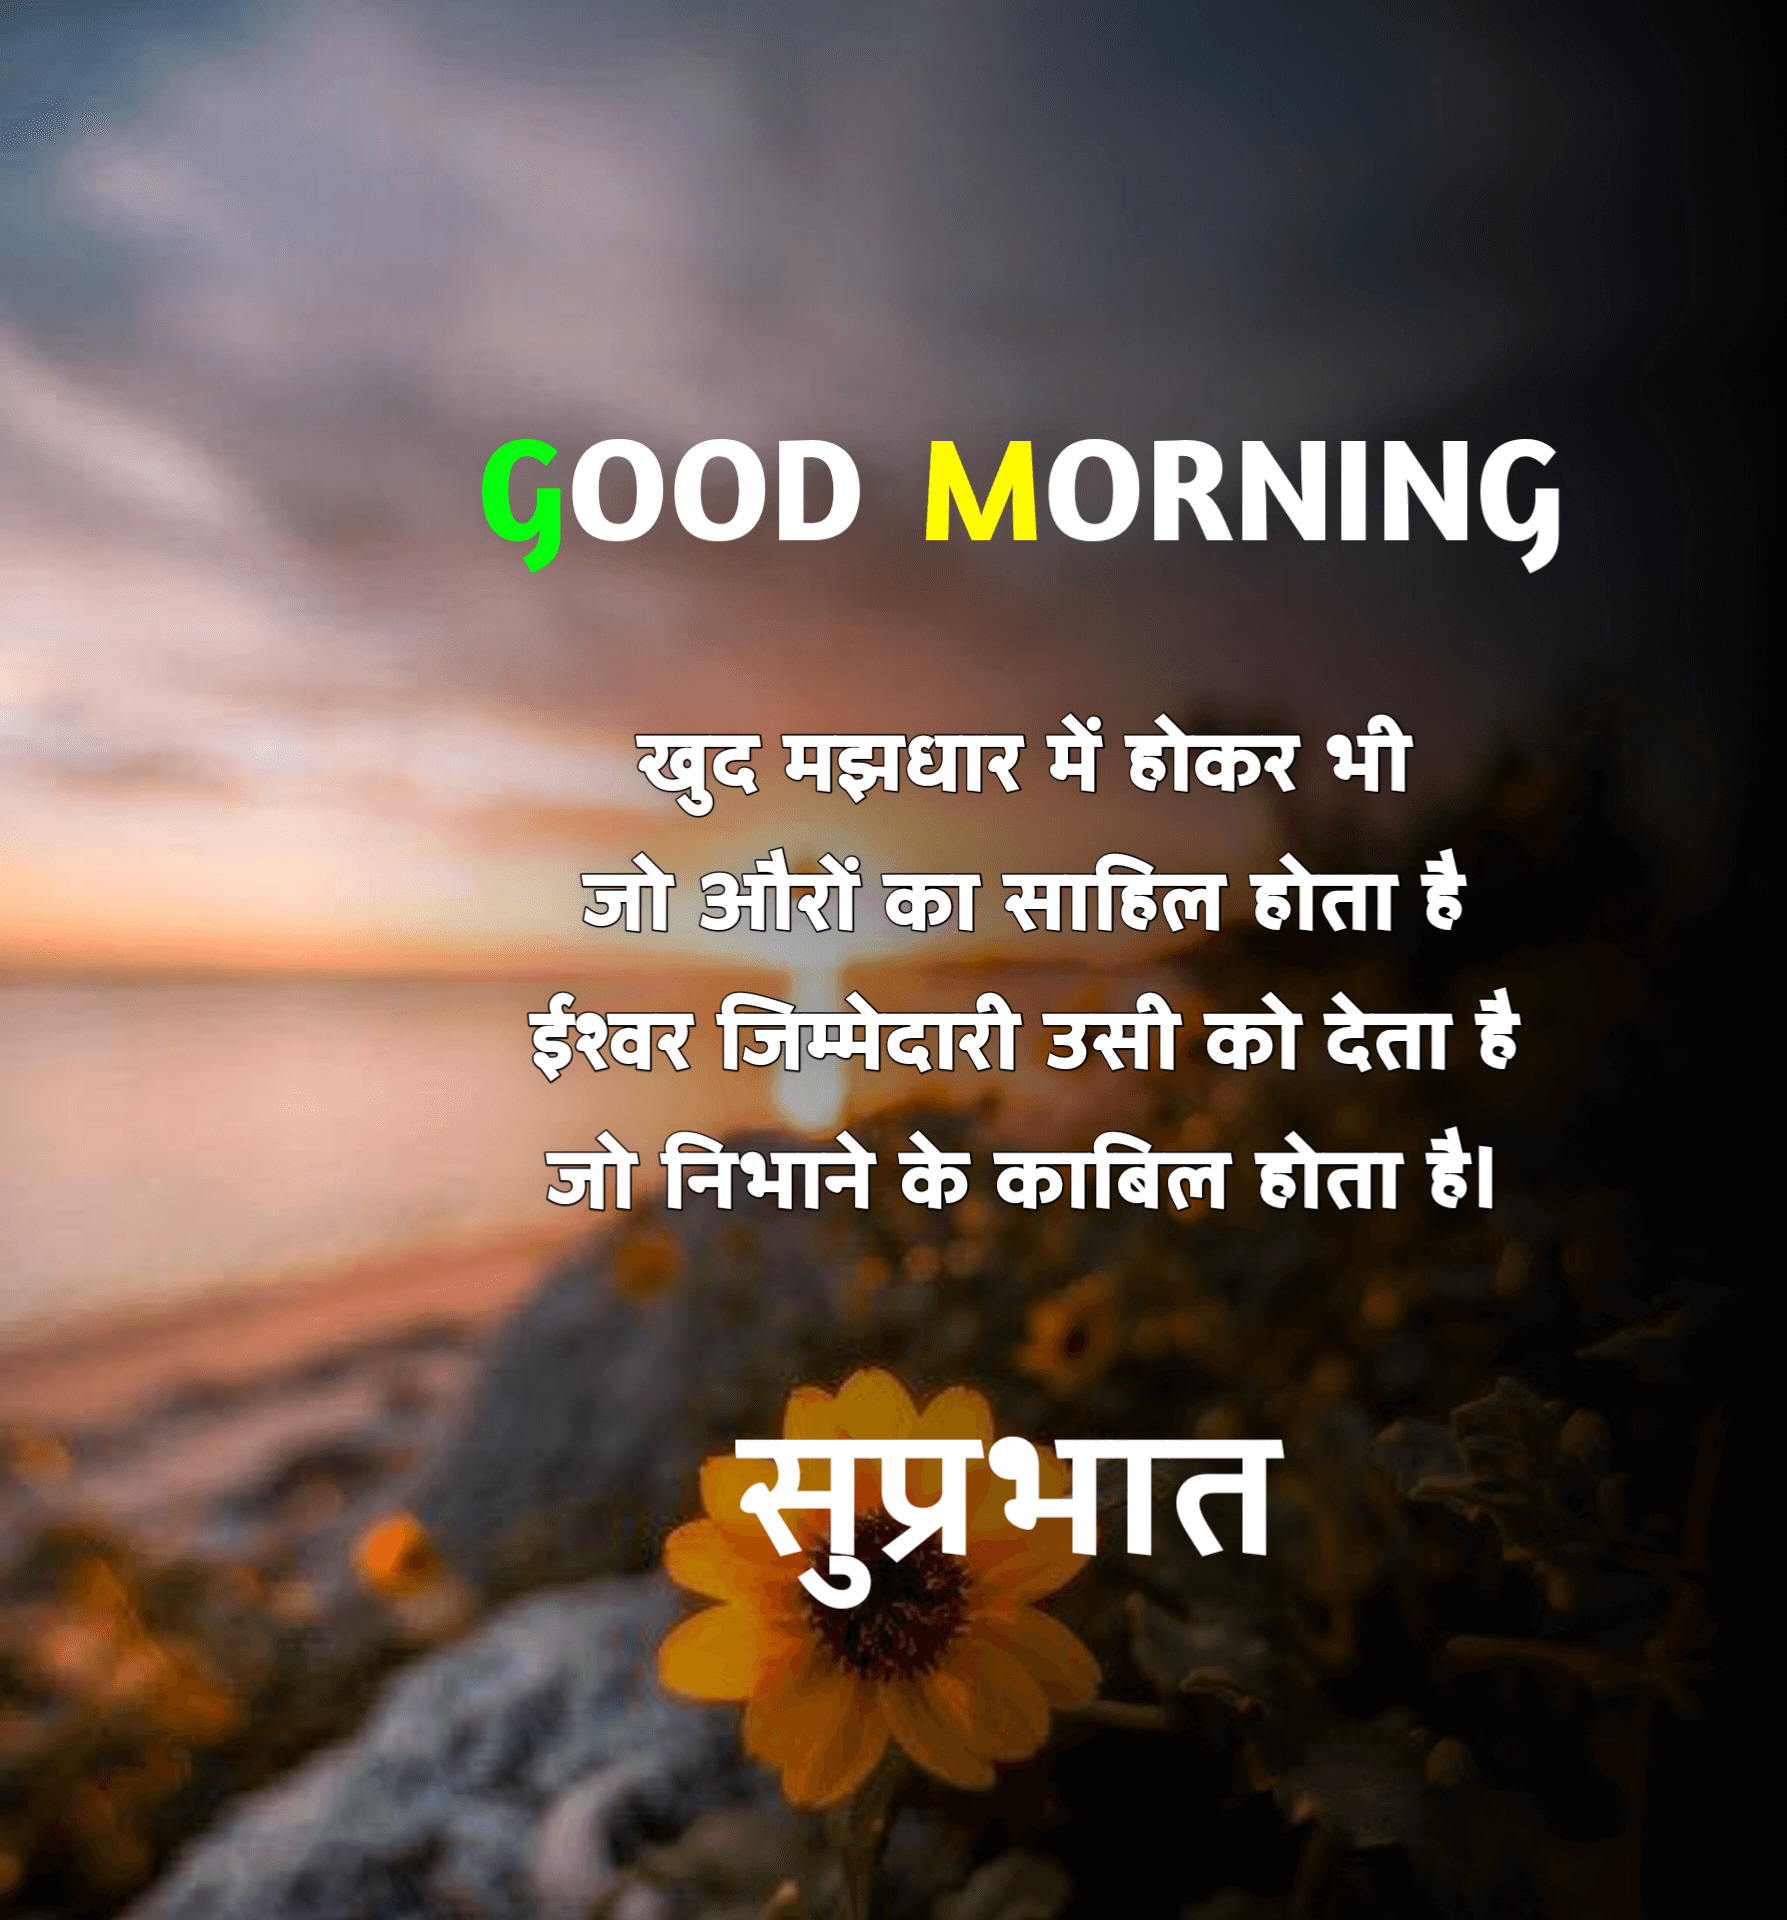 Good Morning Images In Hindi